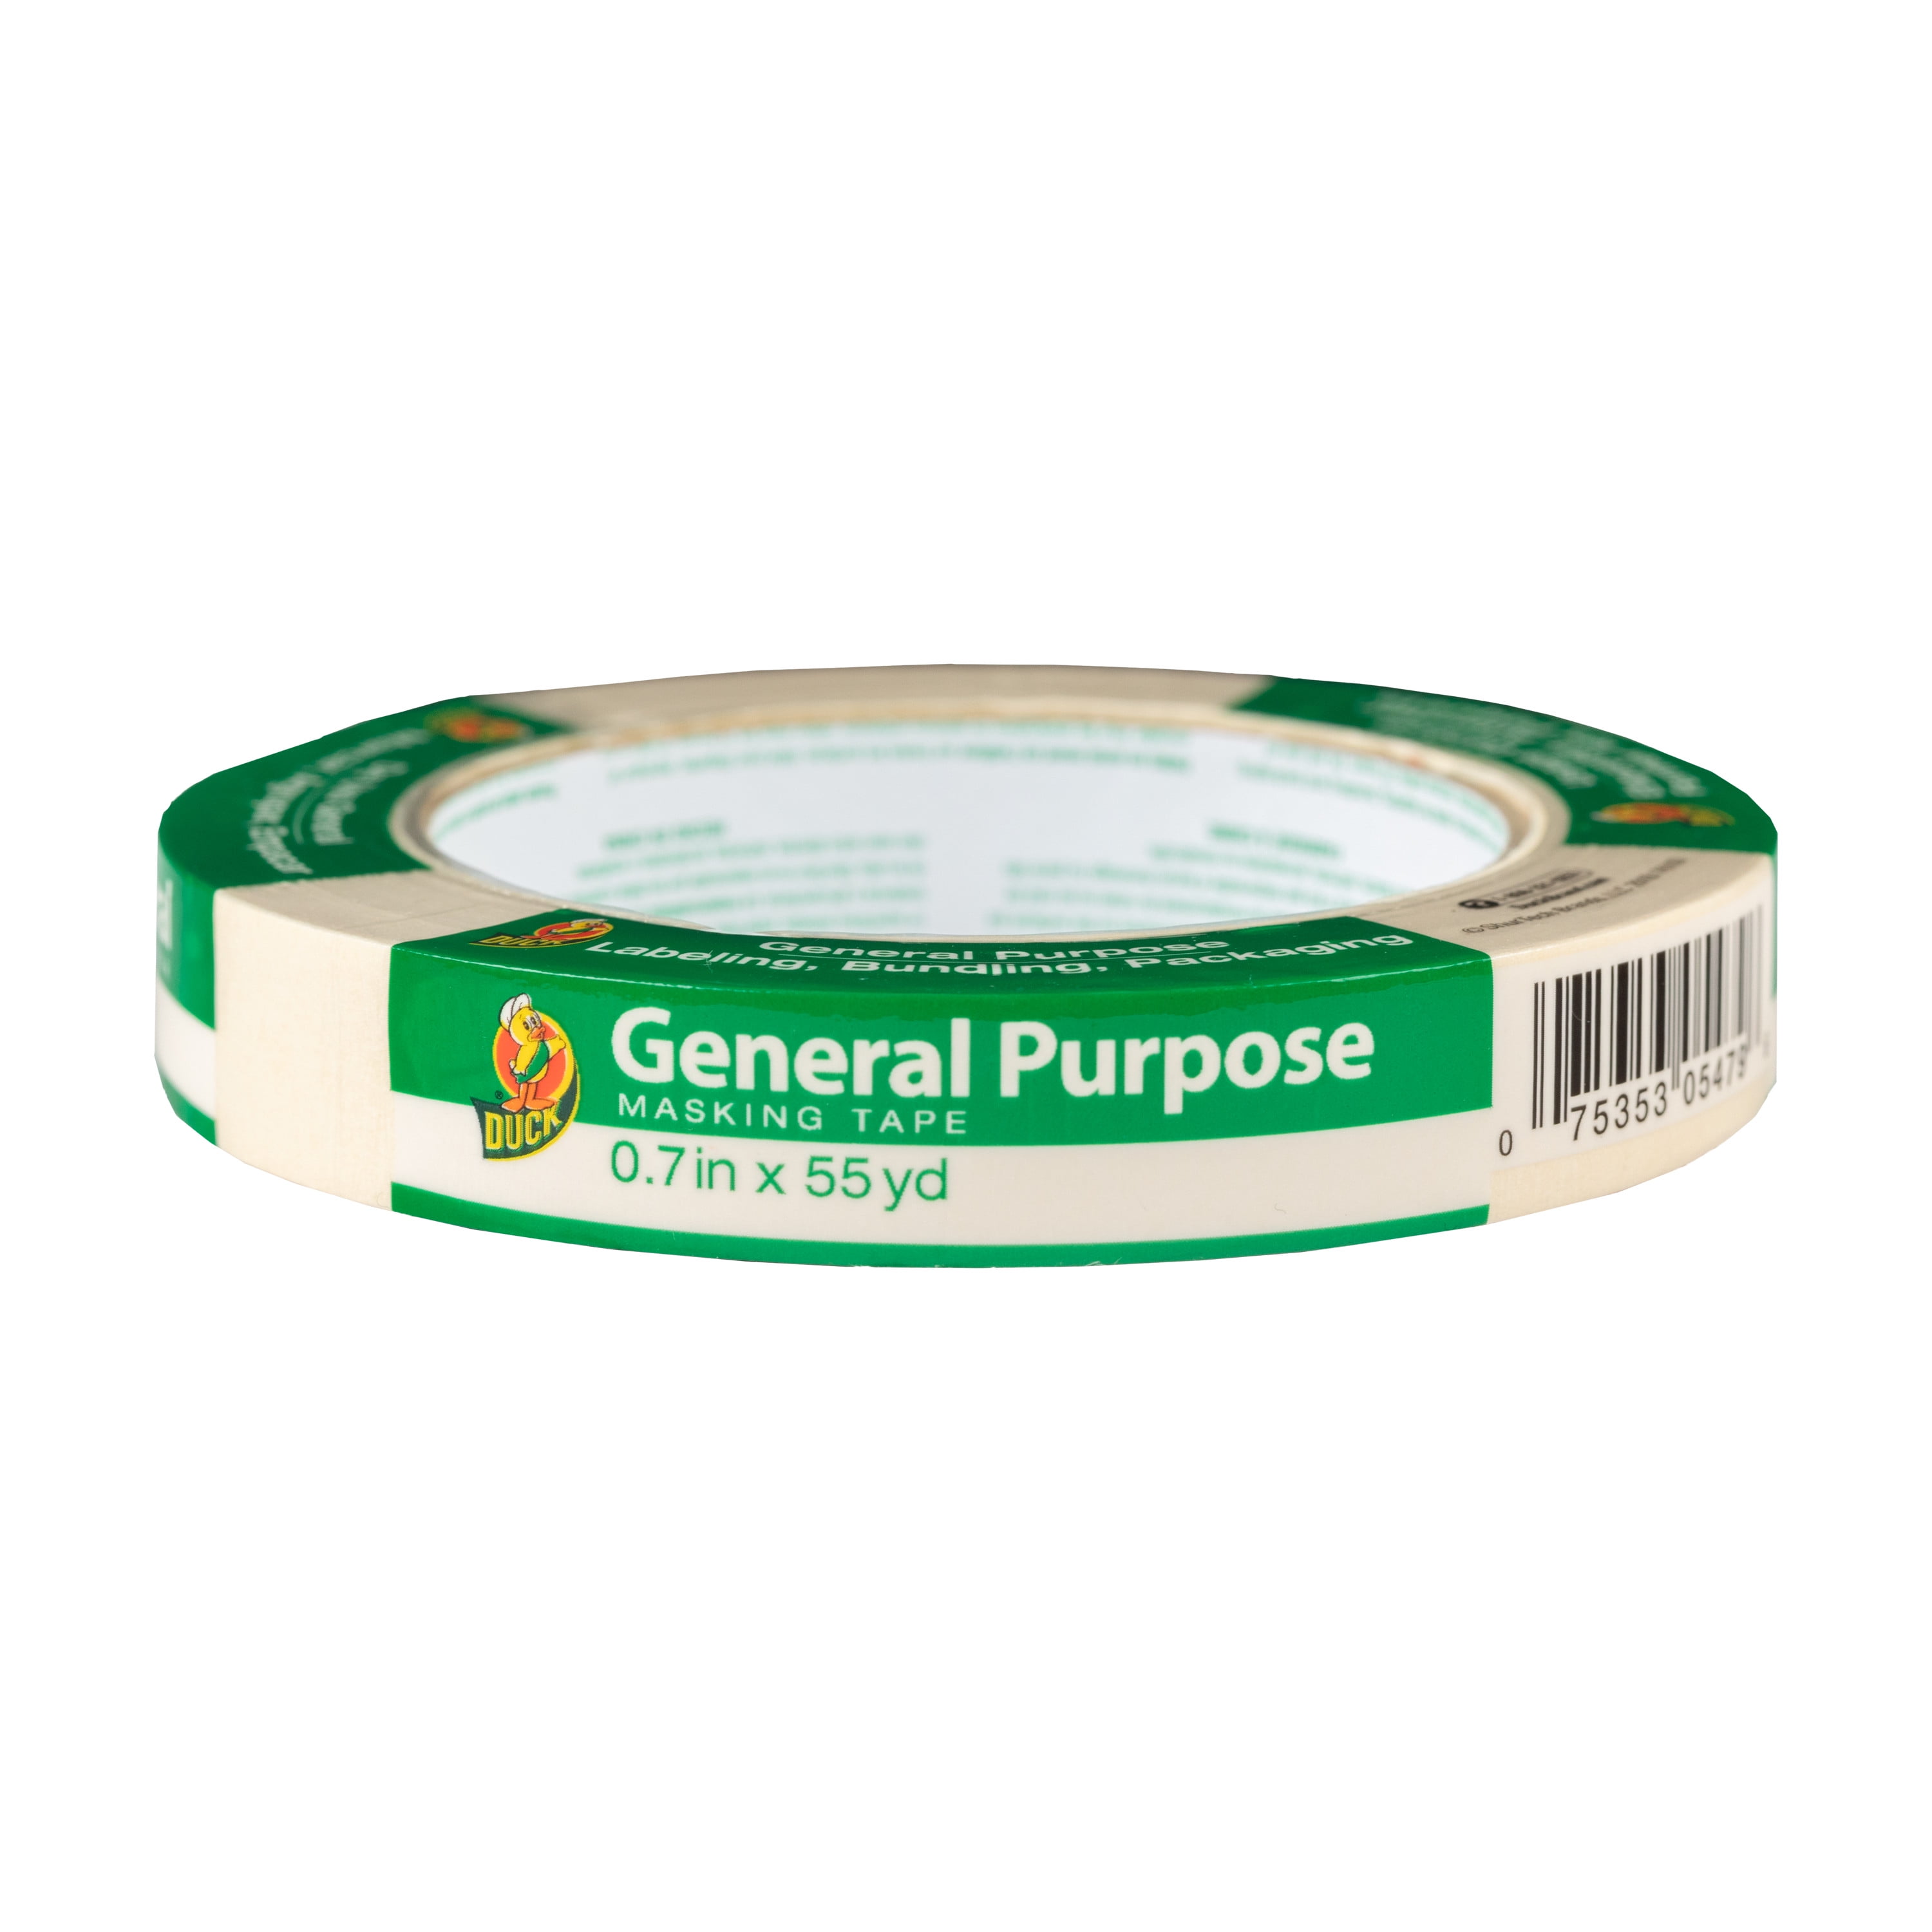 Scotch General Purpose Masking Tape 234